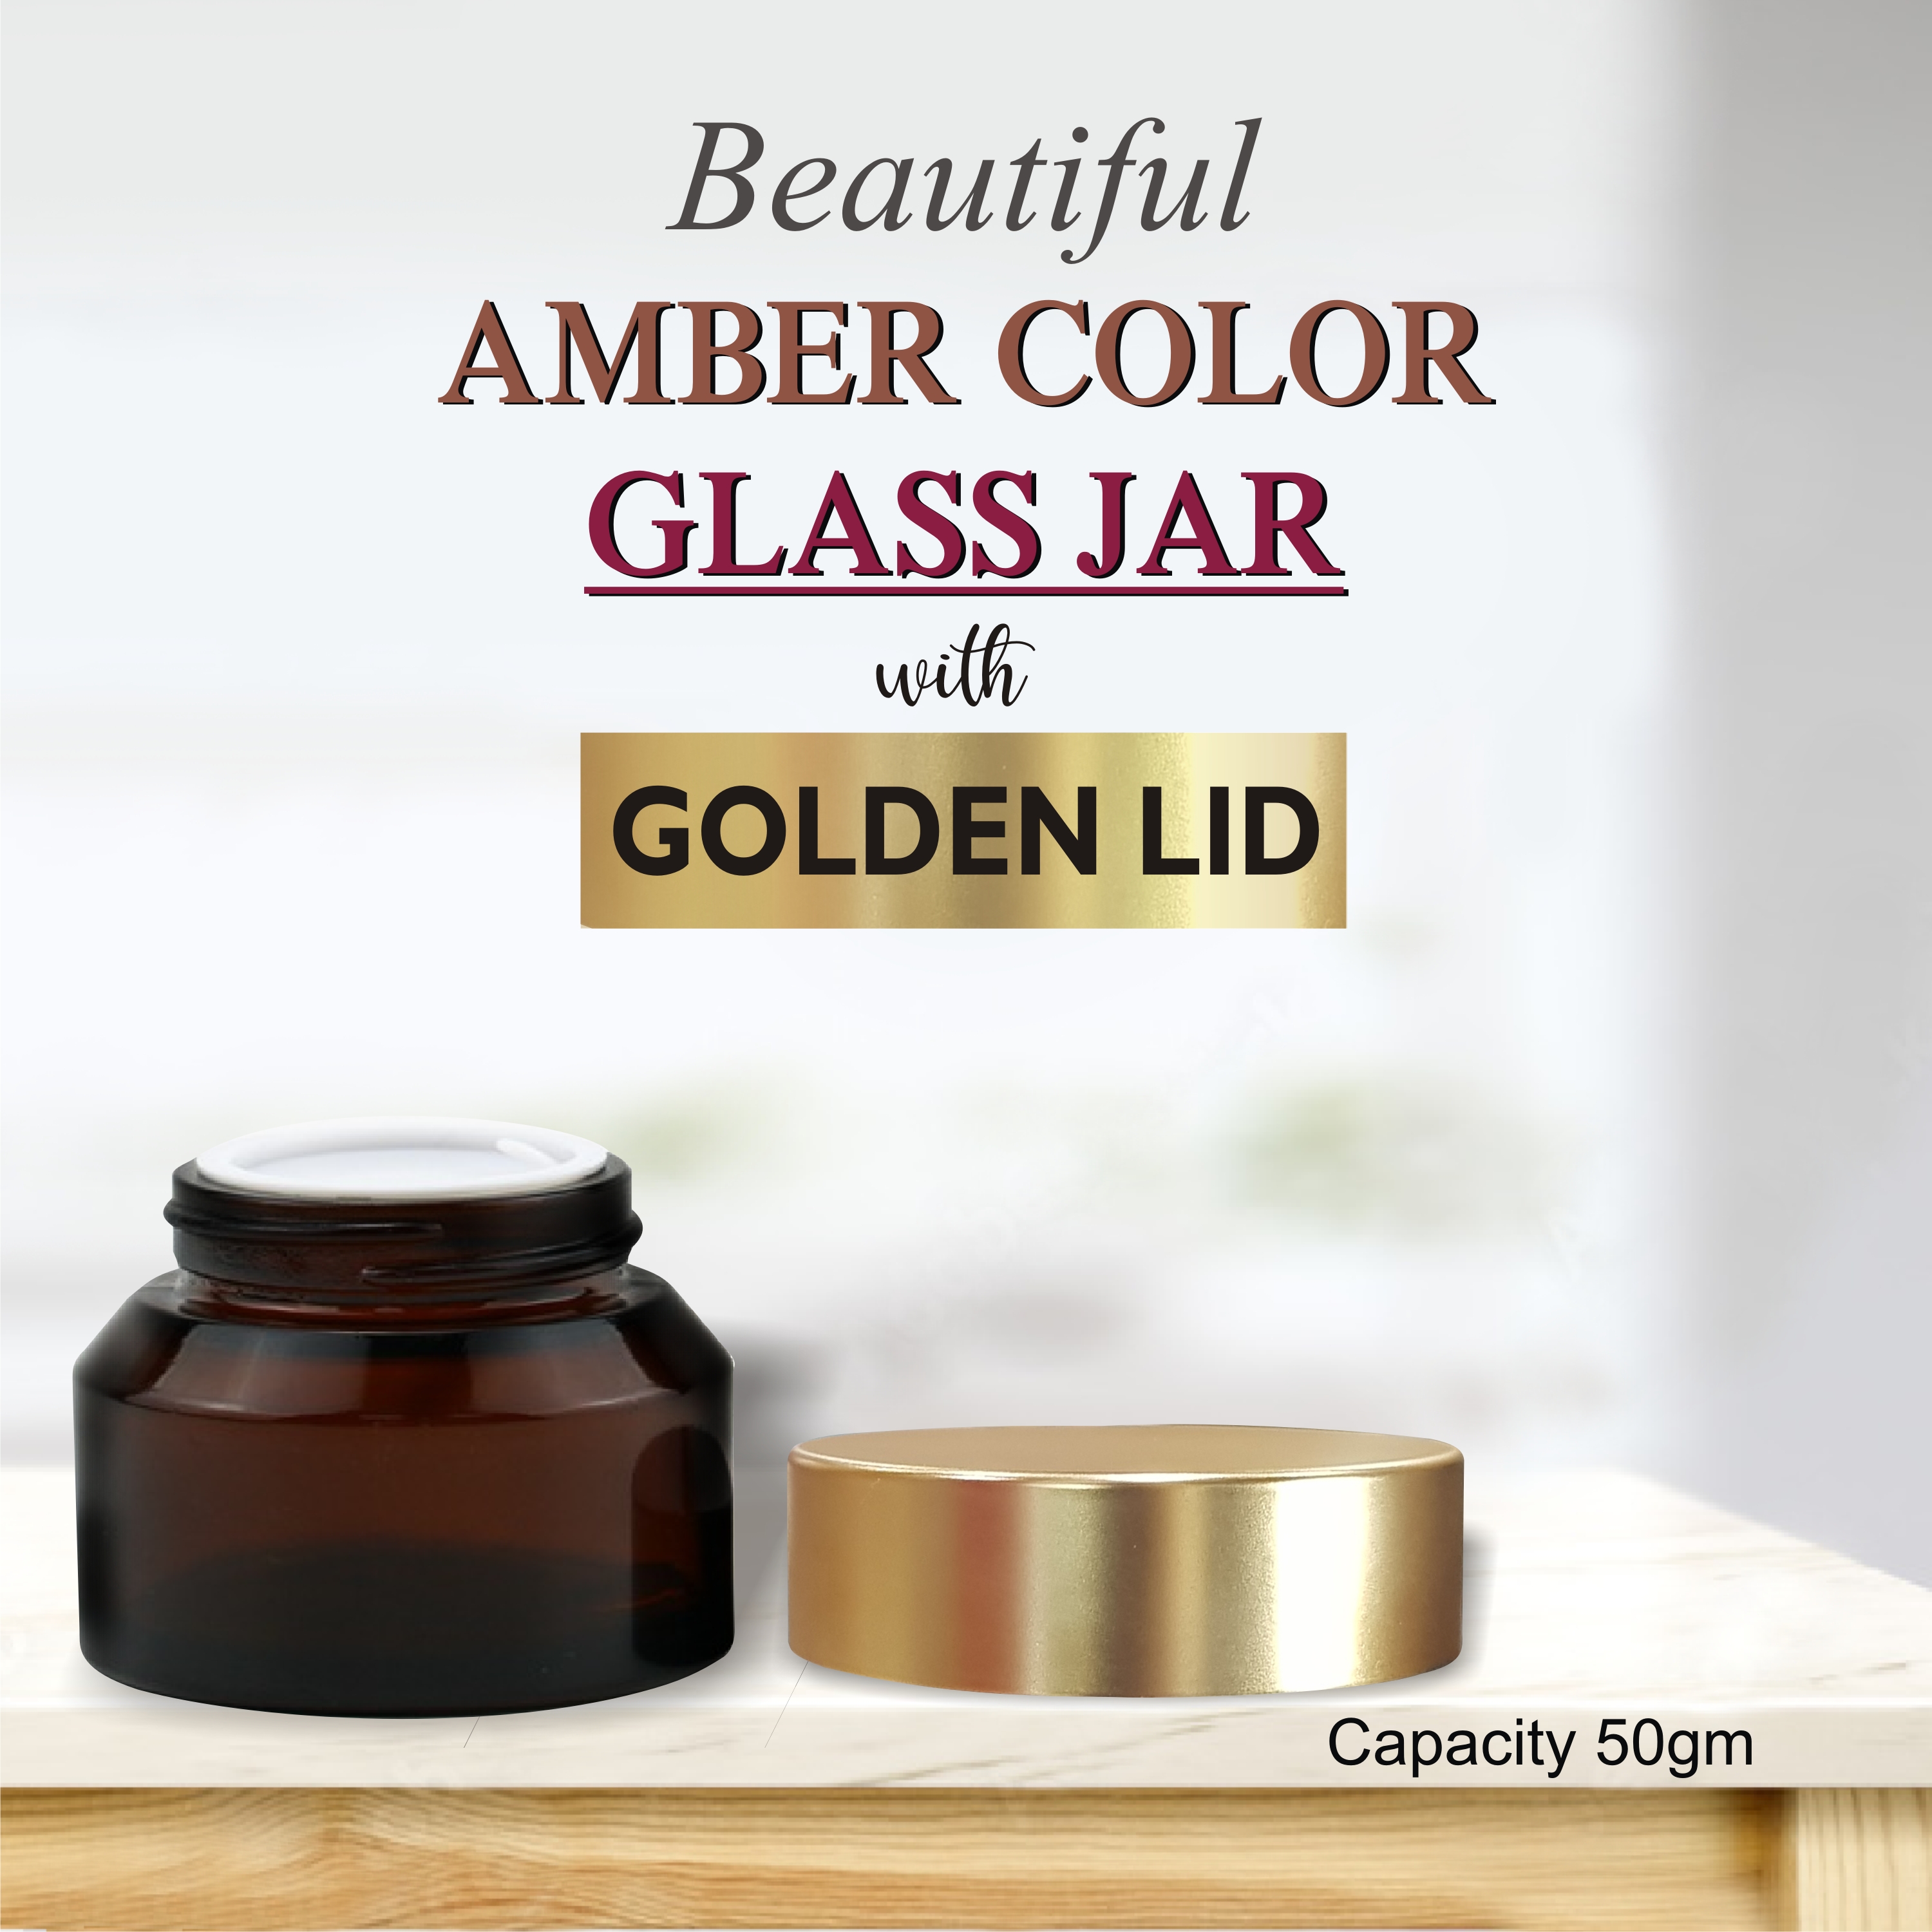 Beautiful Amber Color Glass Jar with Golden Led from Zenvista Meditech Pvt. Ltd.